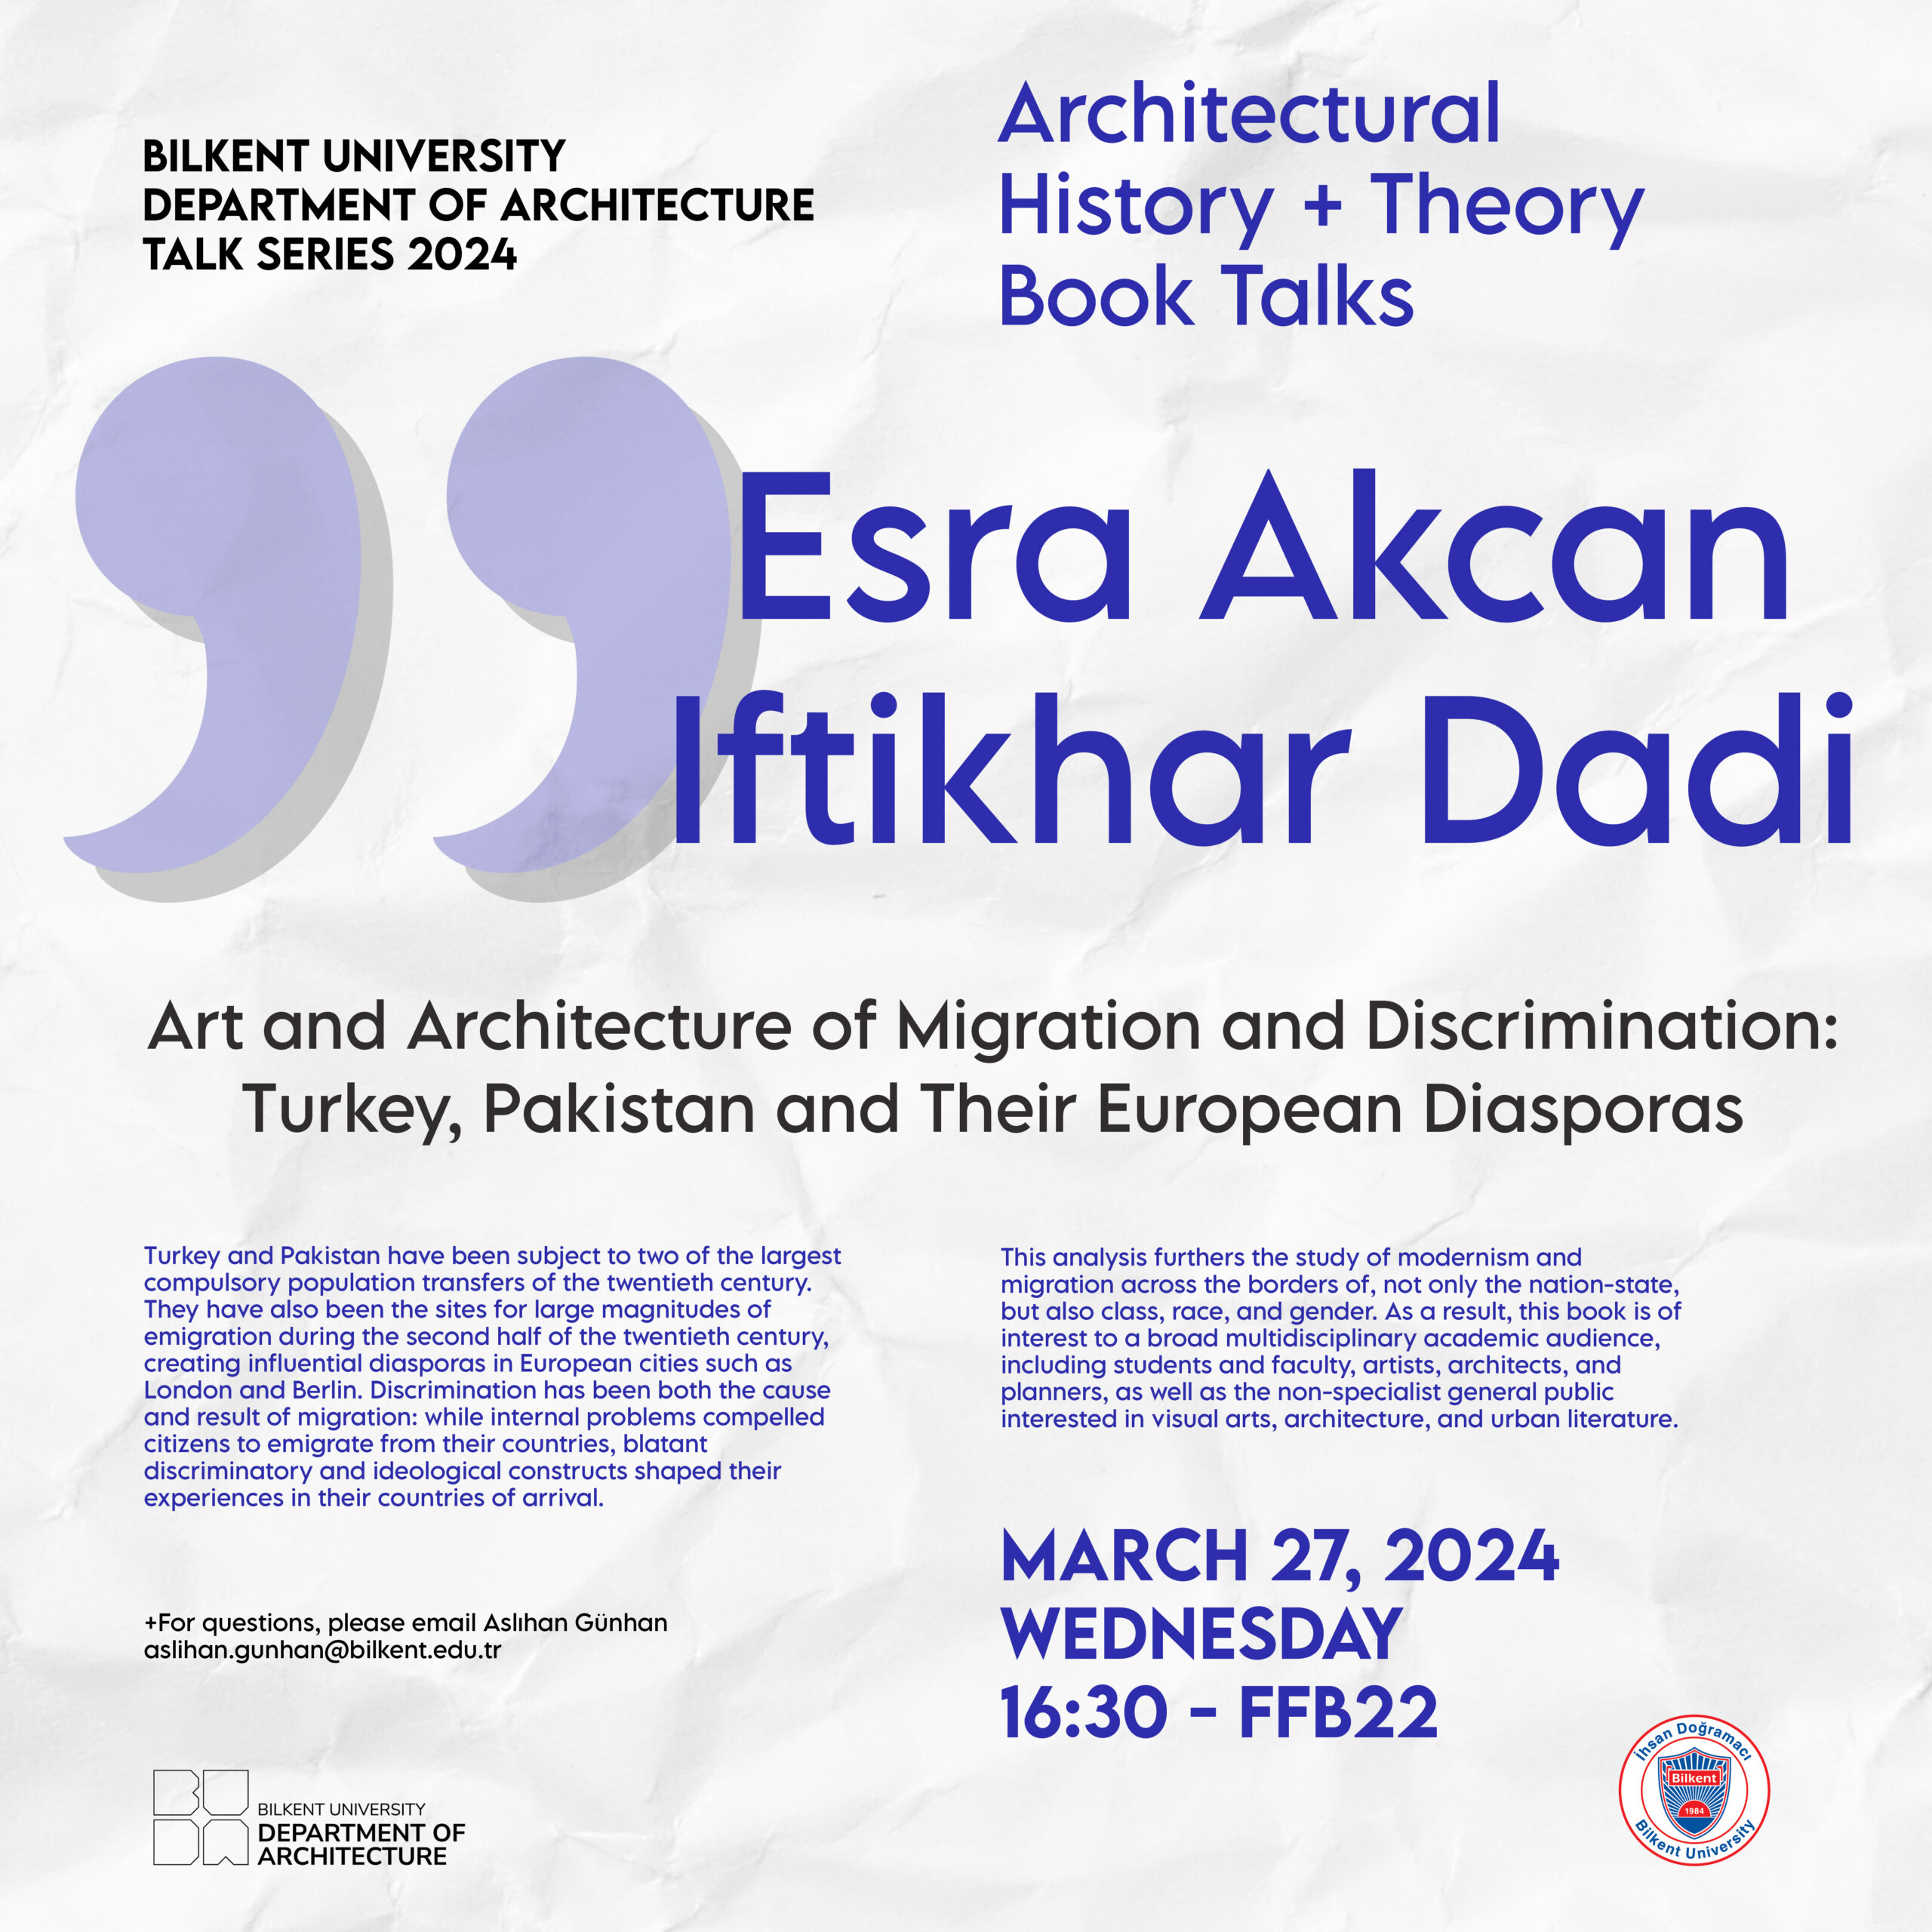 Art and Architecture of Migration and Discrimination: Turkey, Pakistan, and Their European Diasporas